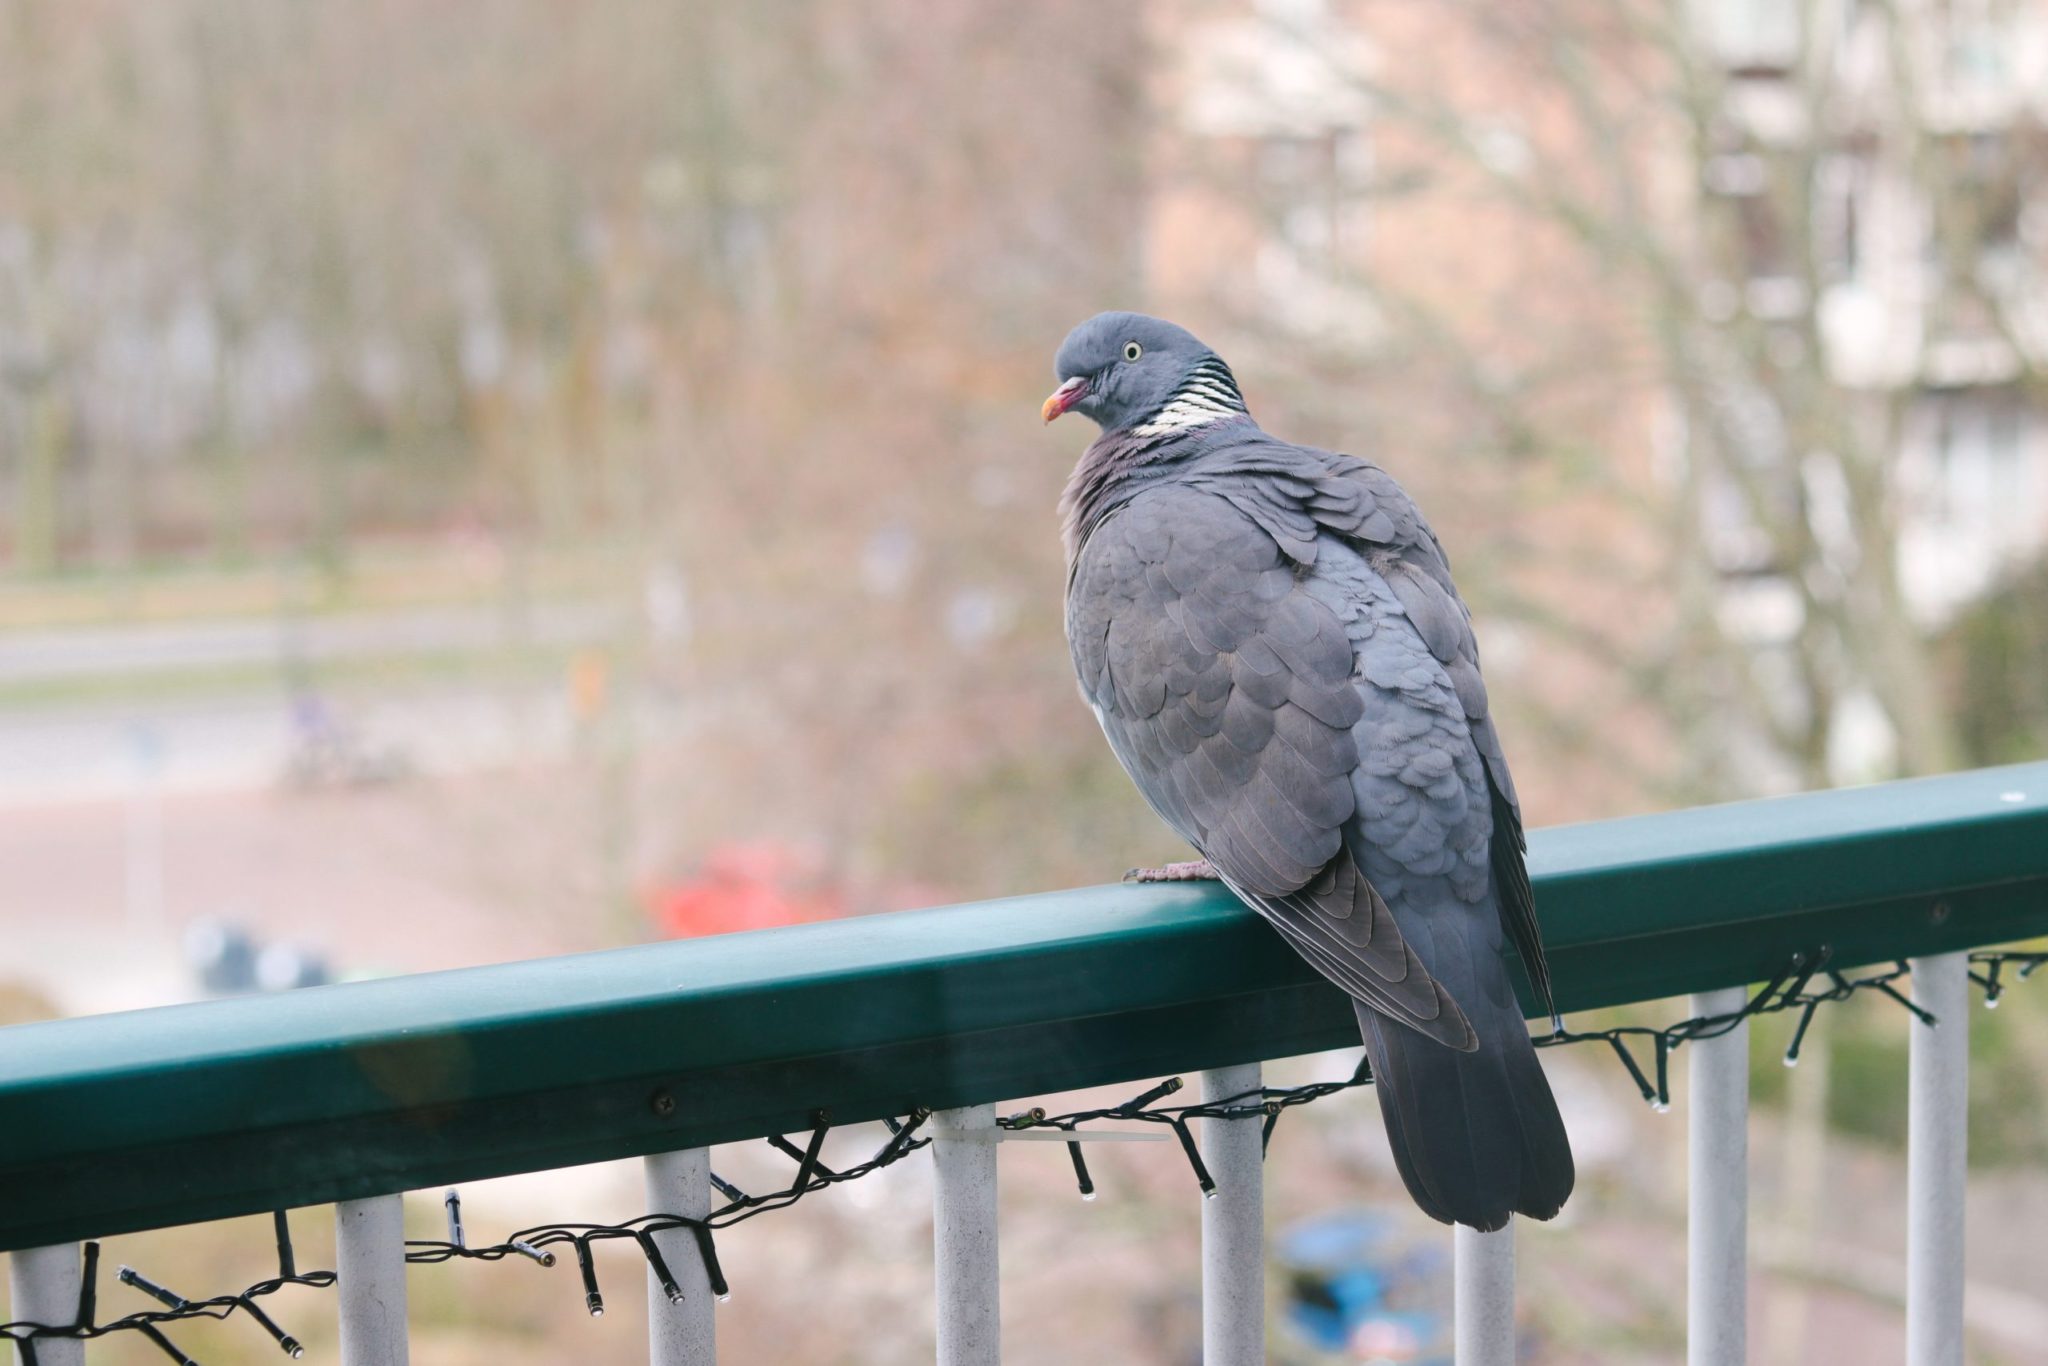 common-wood-pigeon-sitting-on-a-balcony-railing-2022-03-22-00-50-16-utc